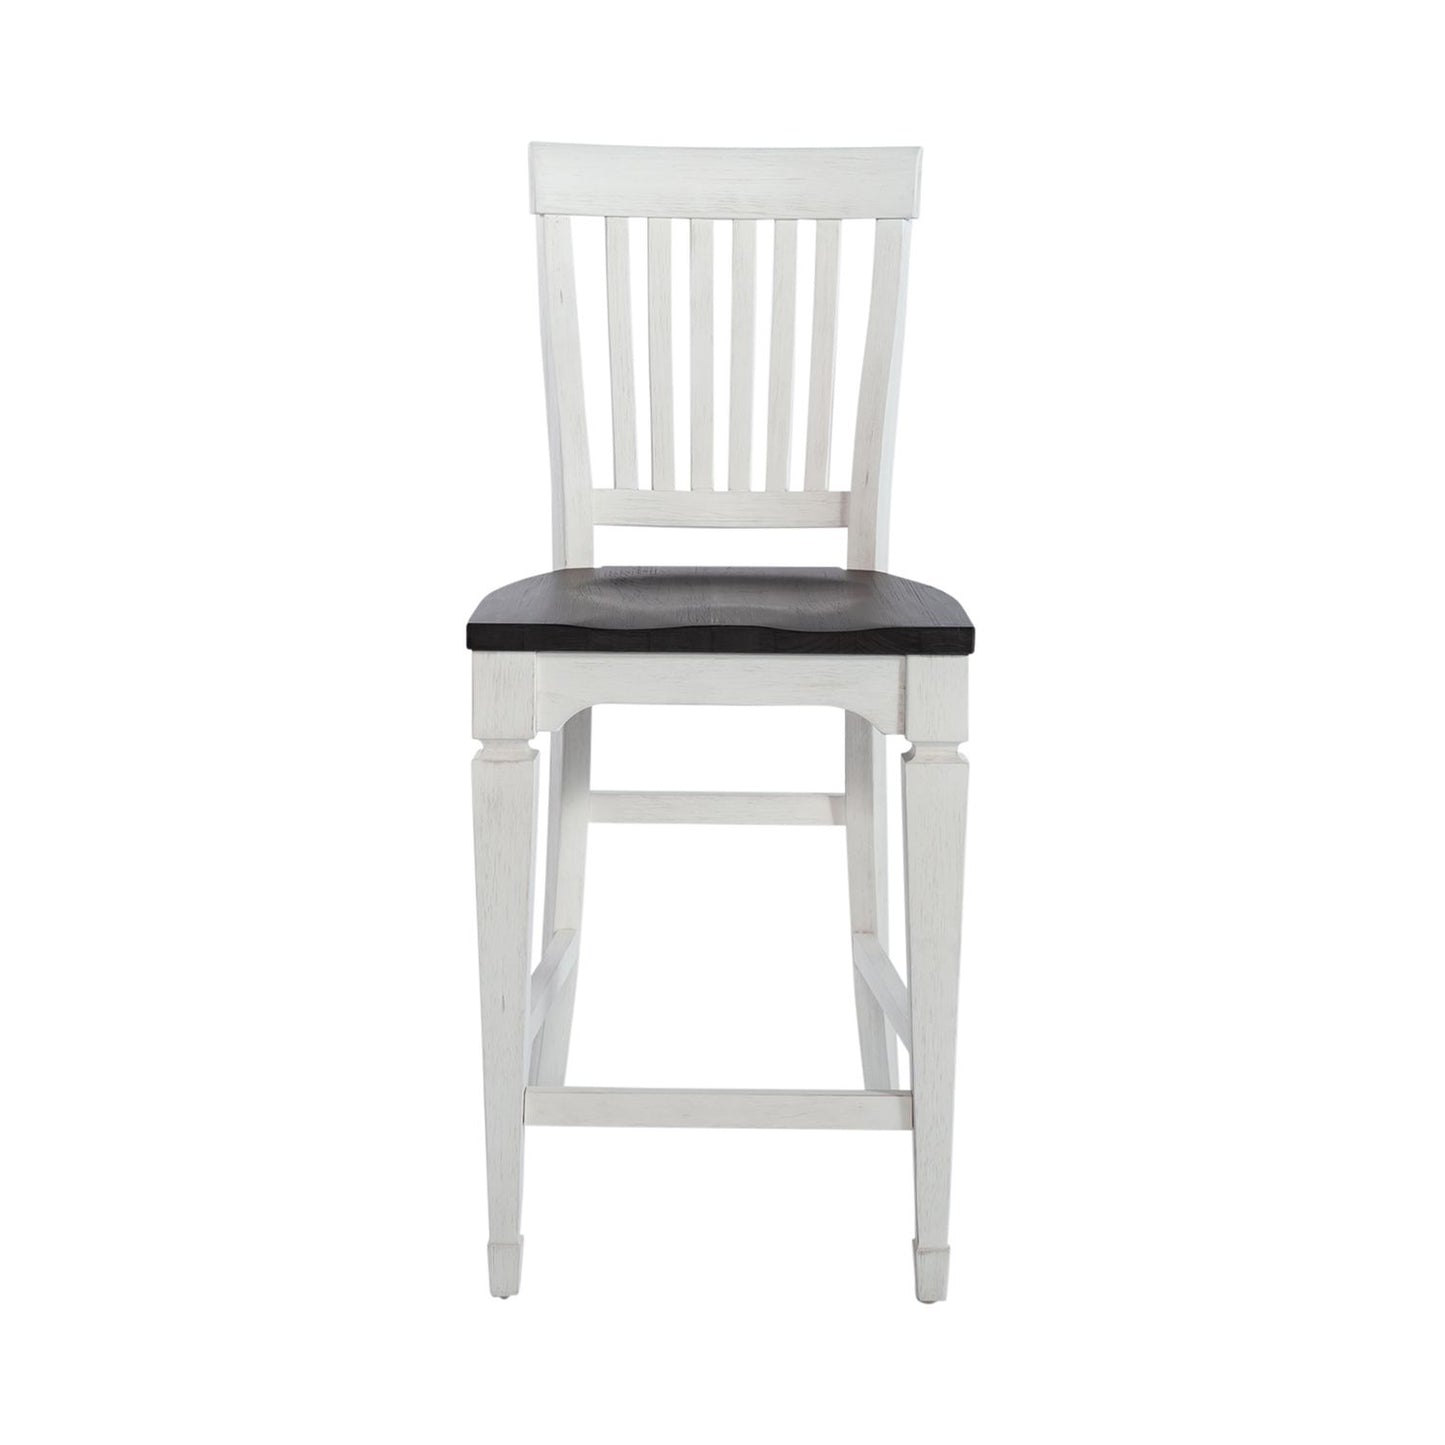 Allyson Park - Counter Height Slat Back Chair